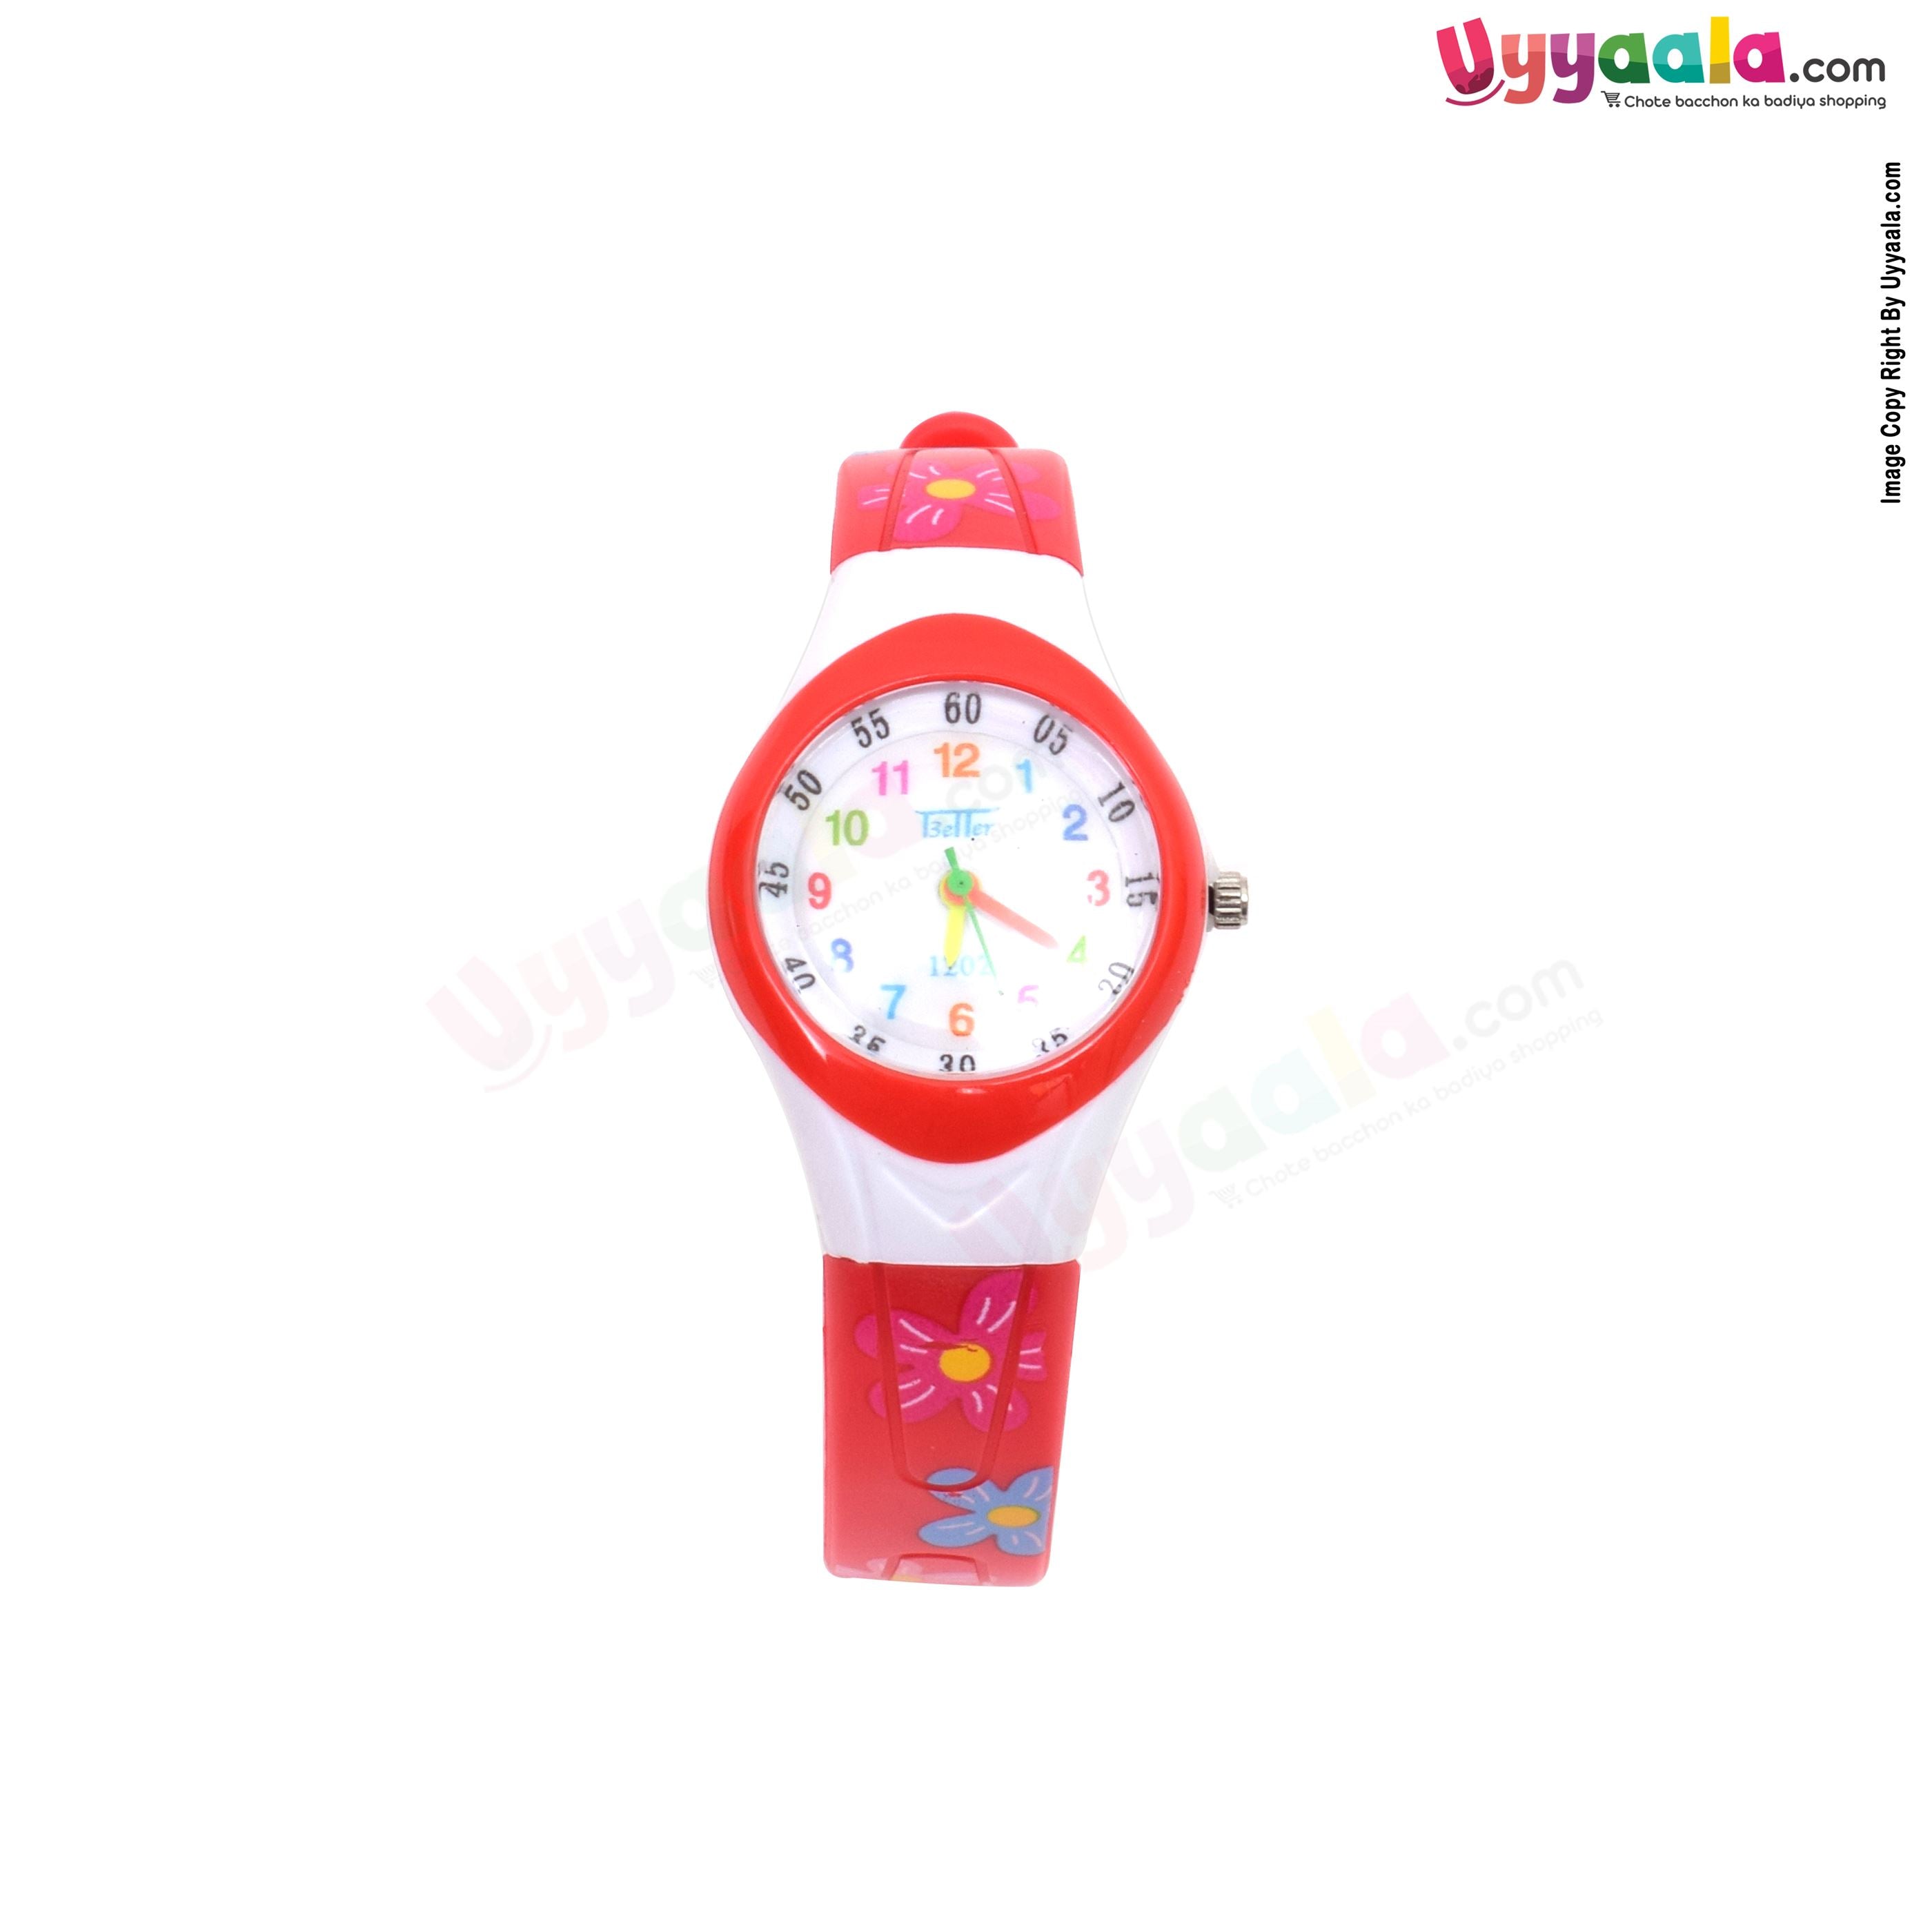 White analog wrist watch for kids